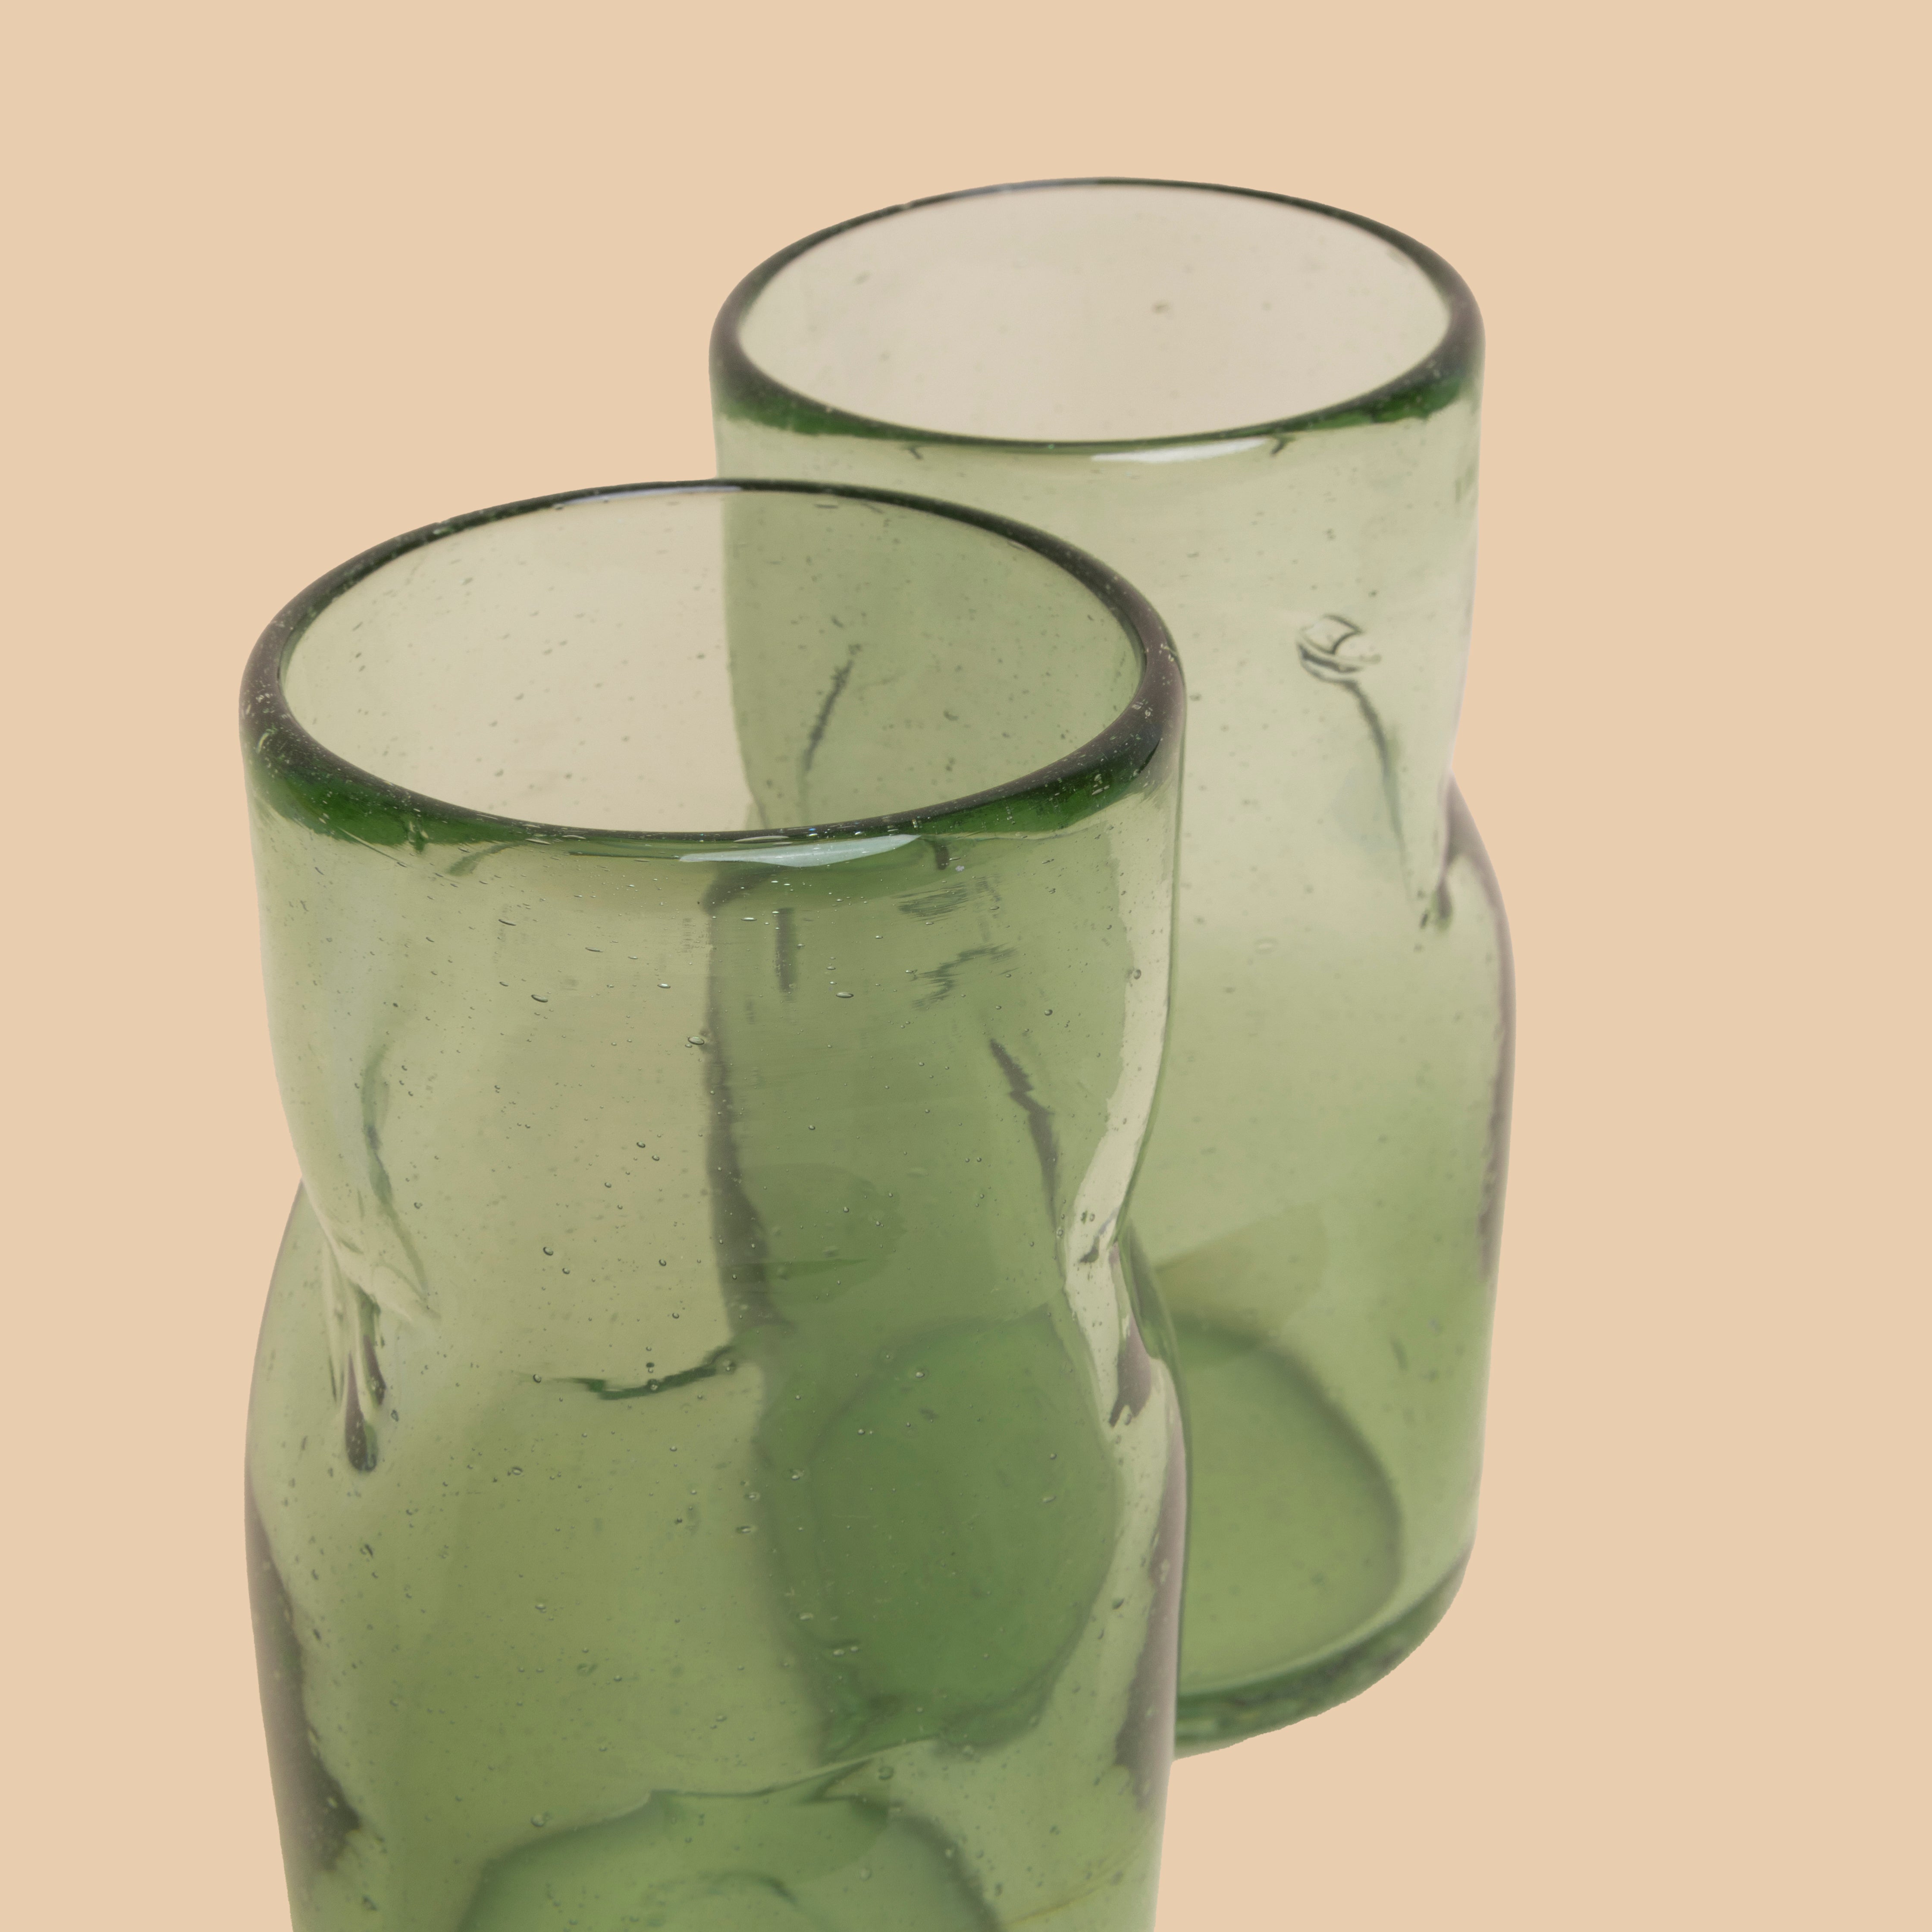 Lime Zest Glass Set, Cup